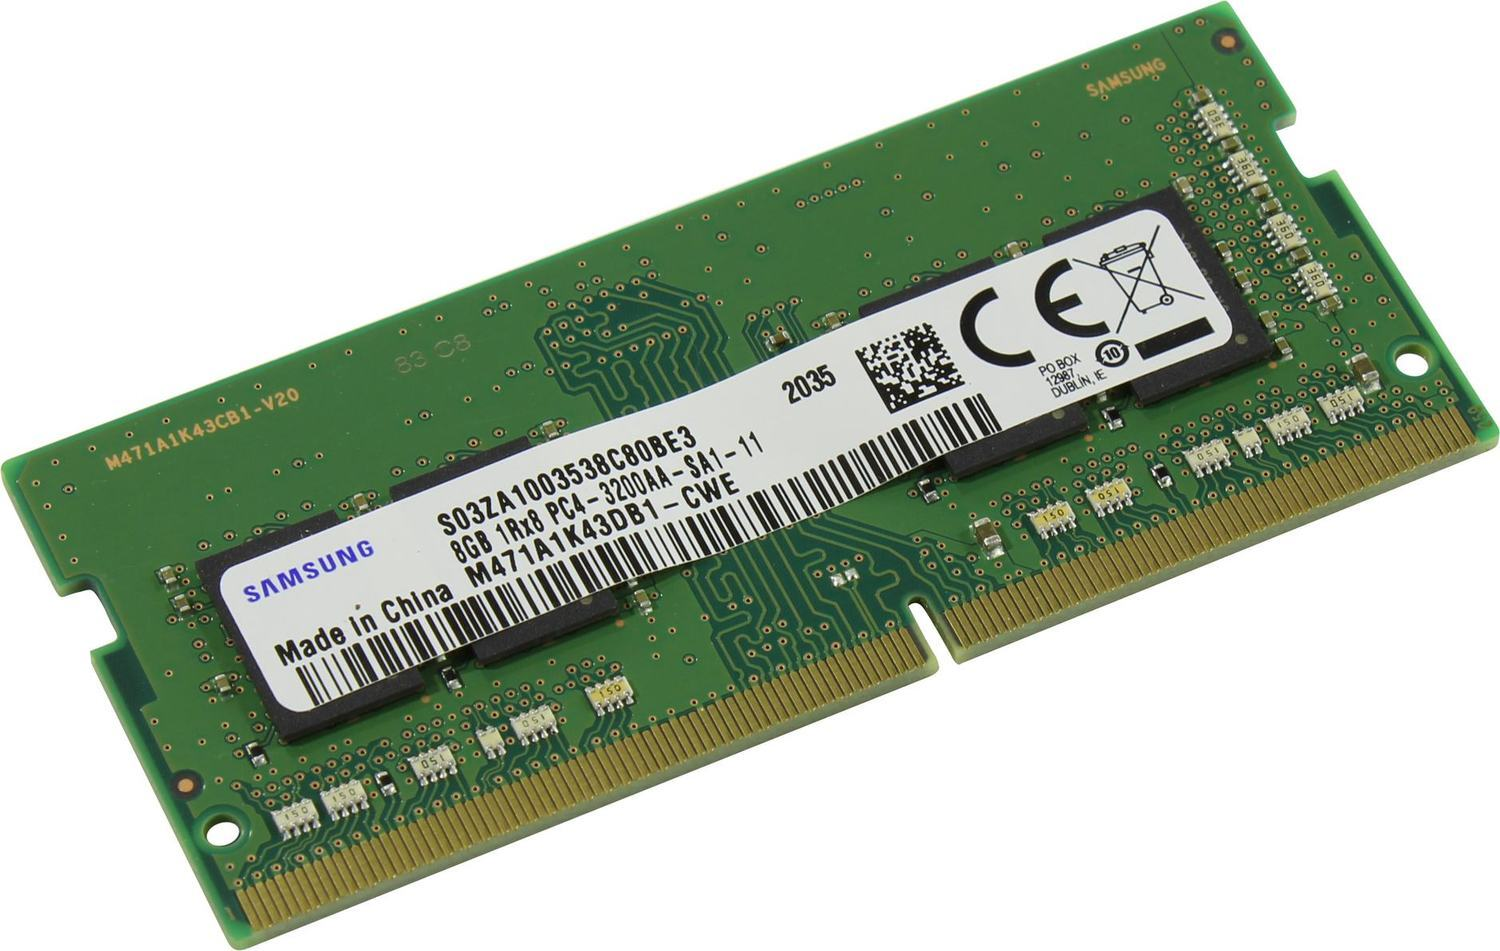 Оперативная память Samsung Desktop DDR4 3200МГц 8GB, M471A1K43DB1-CWE